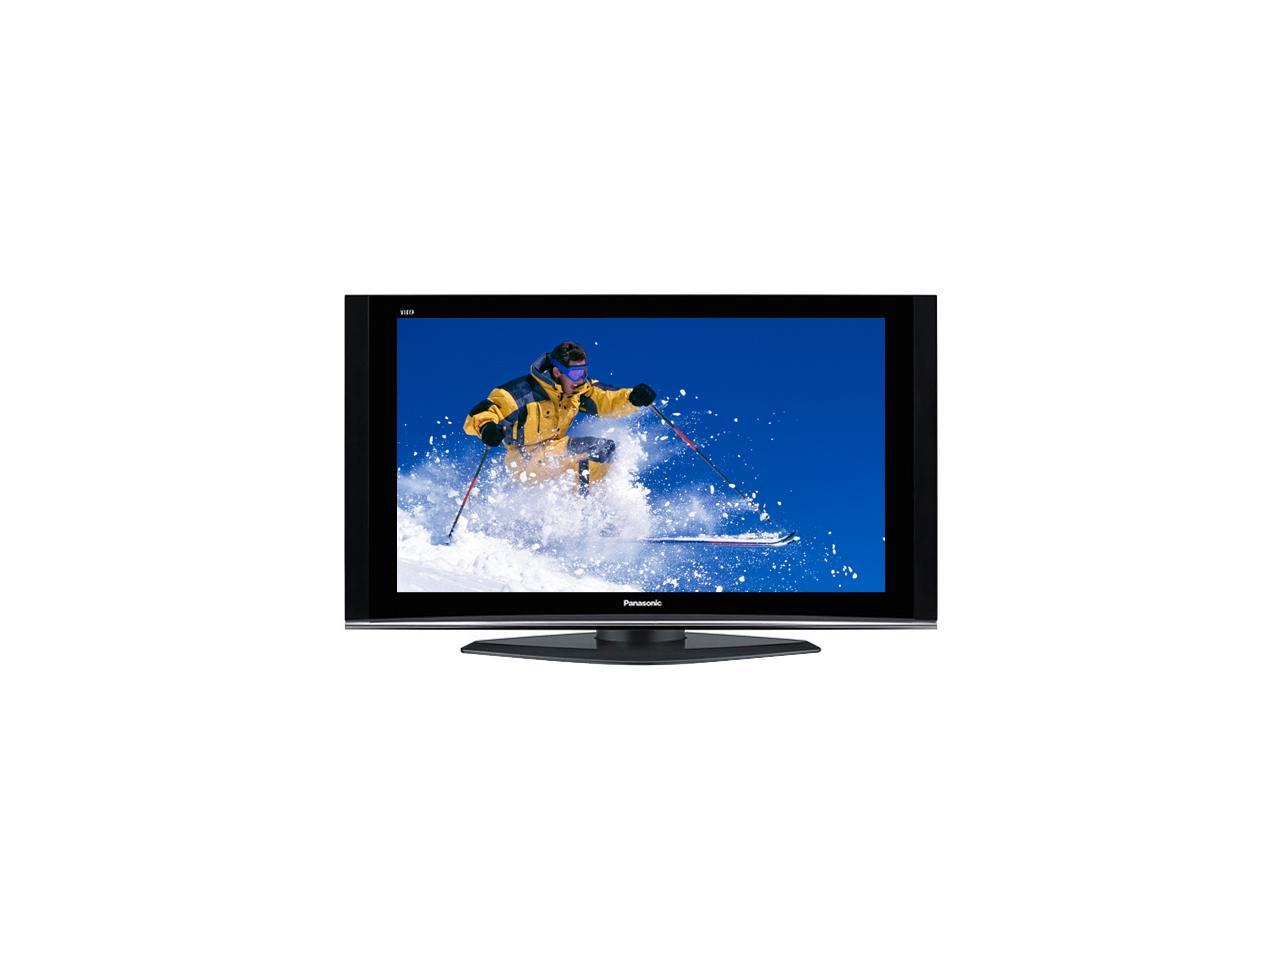 Panasonic Viera 50" 1080p Plasma HDTV w/ EZ Sync and Built-in Gallery